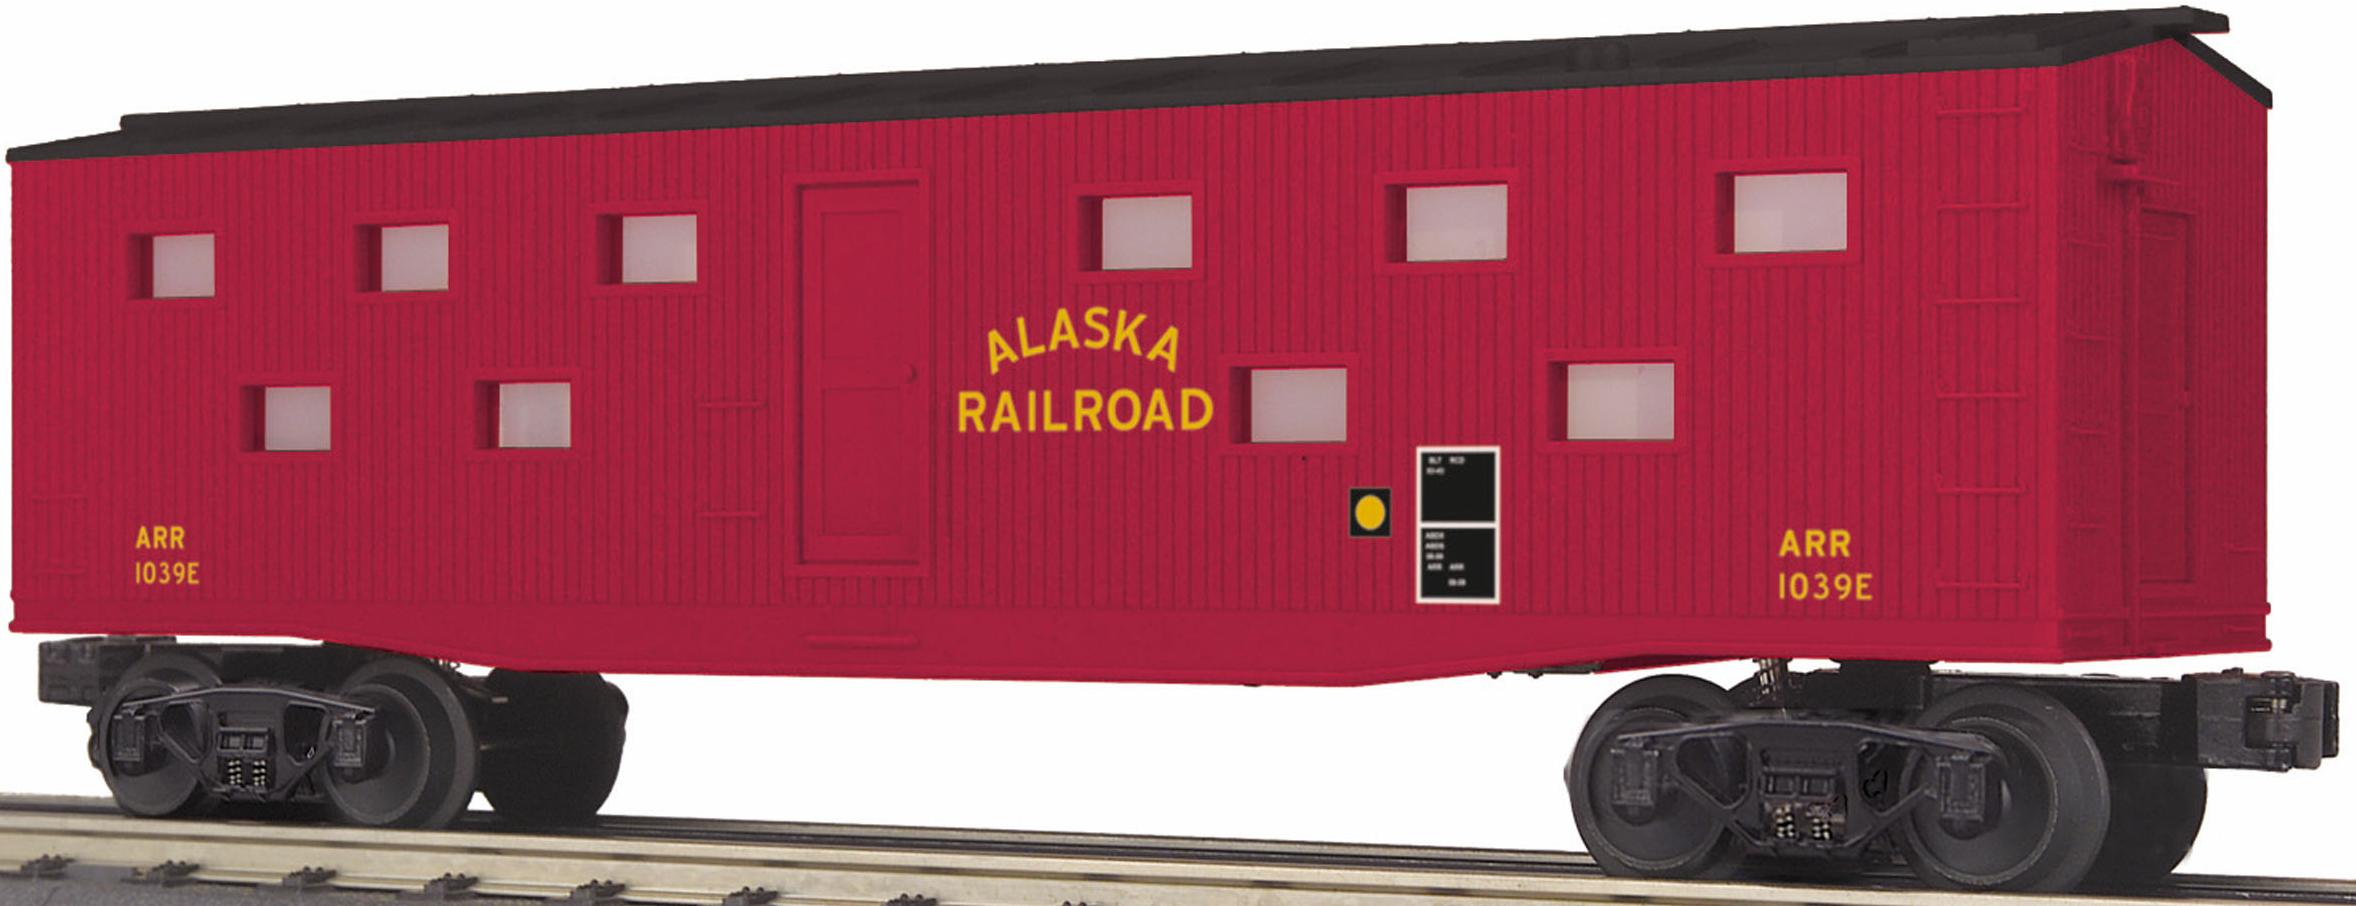 Alaska Railroad Illuminated Bunk Car image